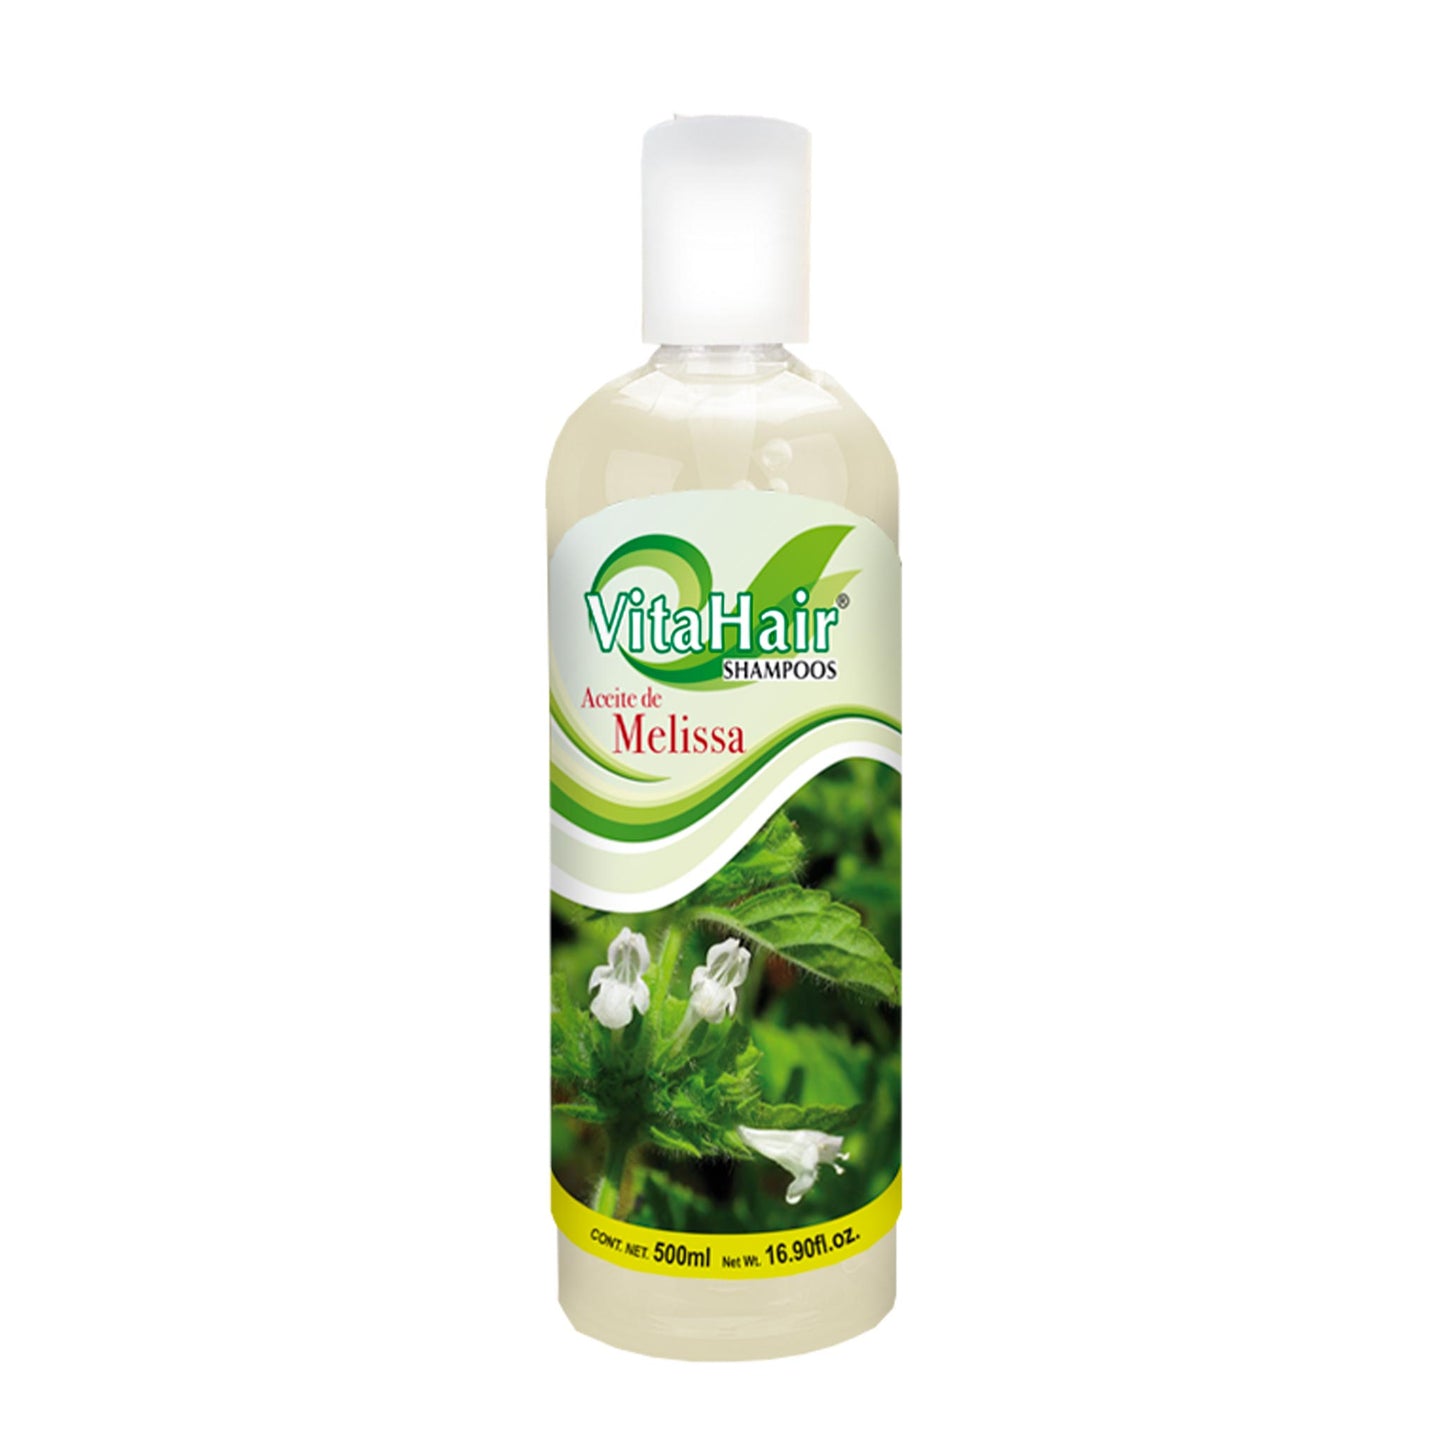 VITAHAIR ® shampoo de melissa 500ml